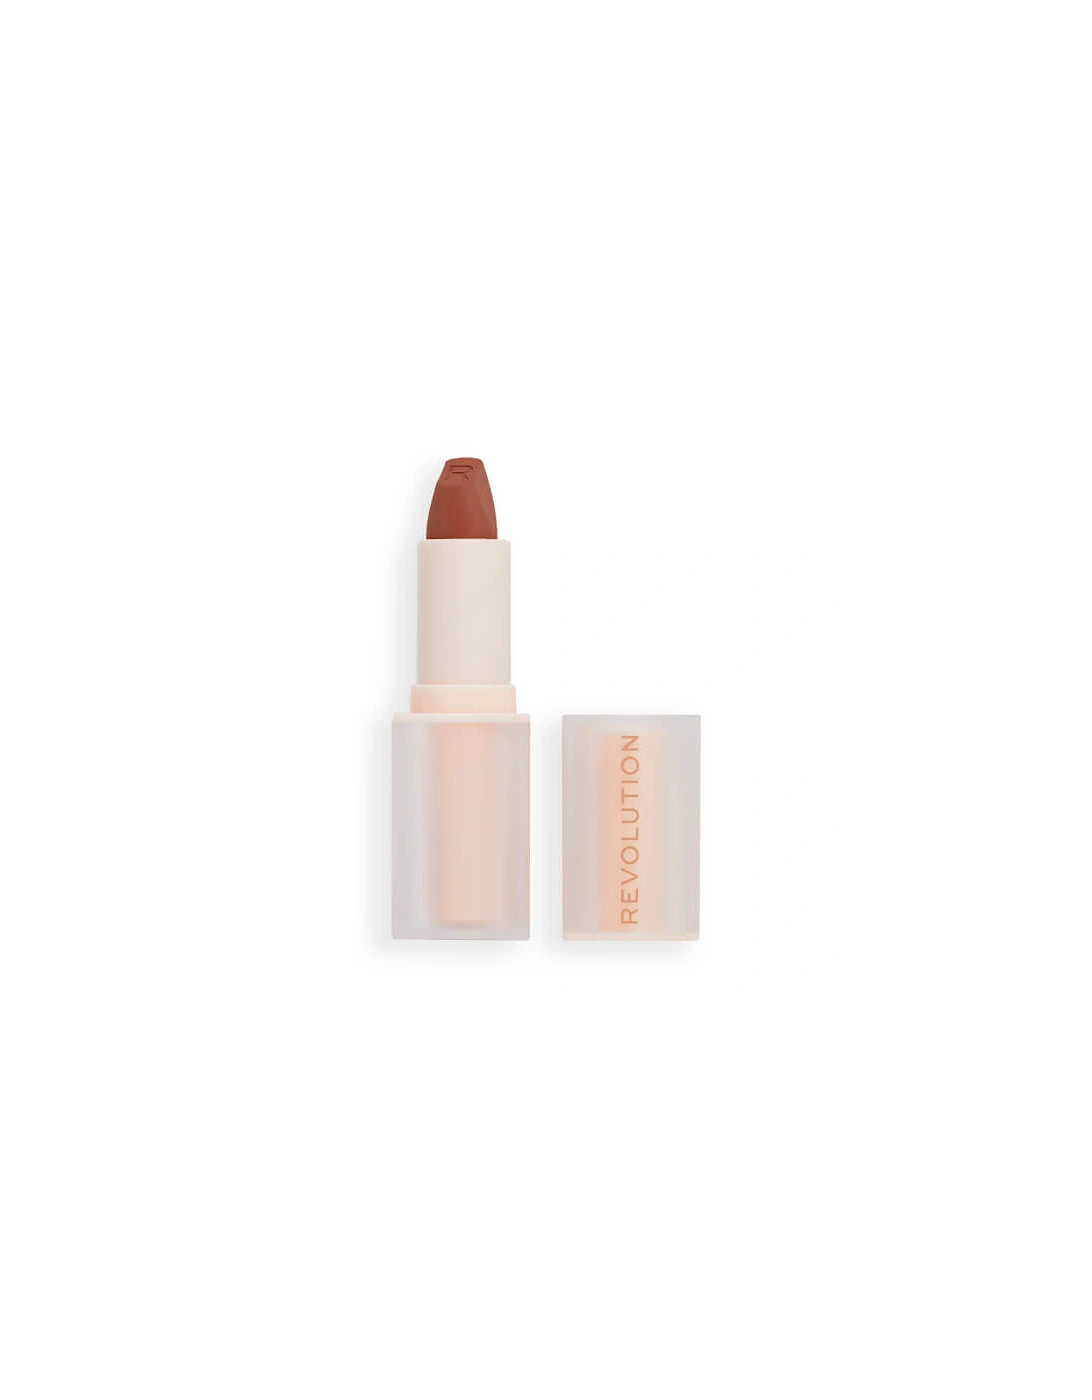 Makeup Lip Allure Soft Satin Lipstick - Chauffeur Nude, 2 of 1